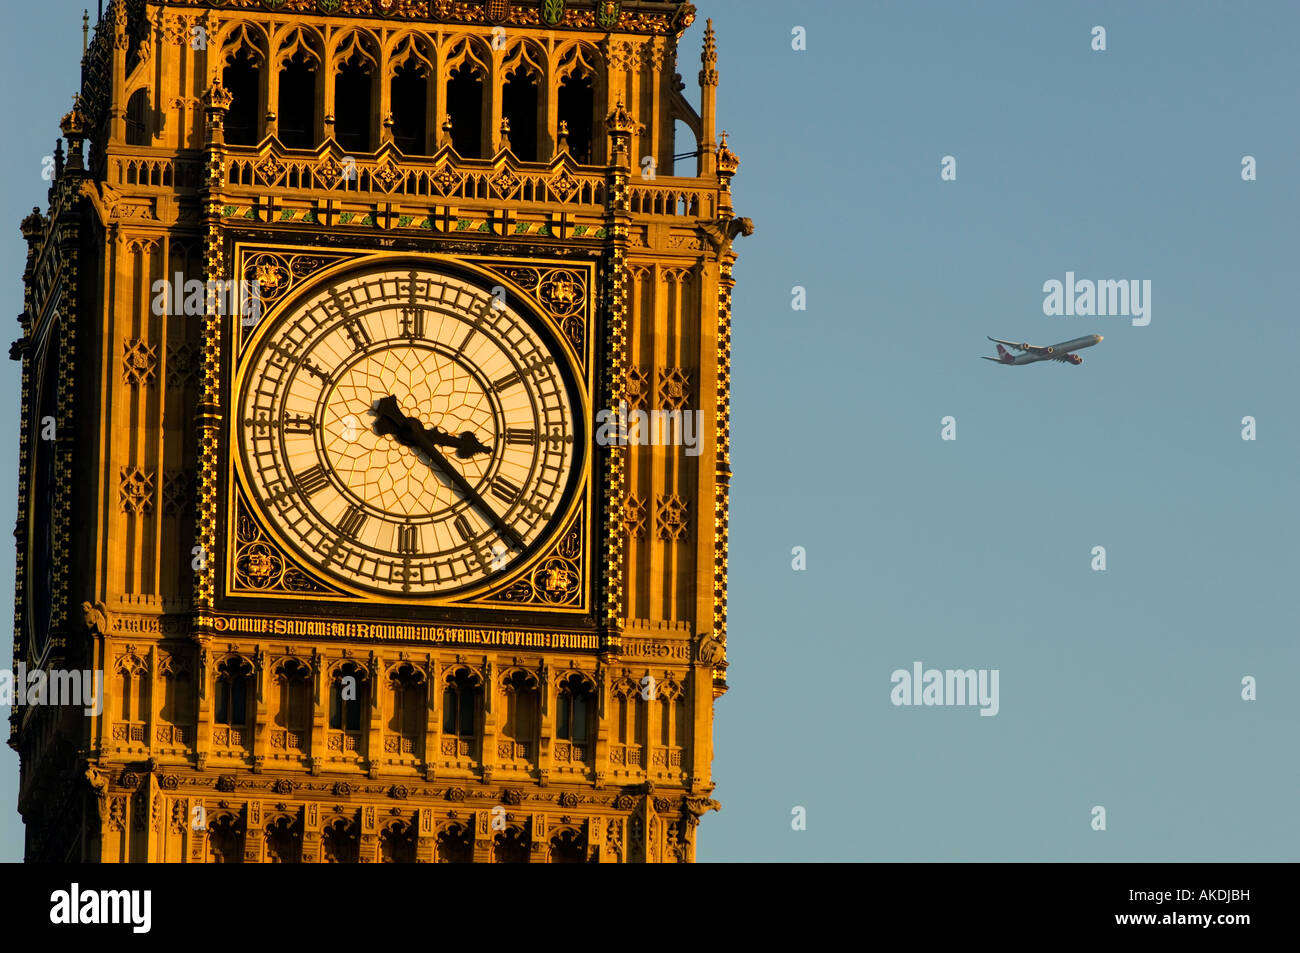 Clock tower of Houses of Parliament Bg Ben London United Kingdom Stock Photo